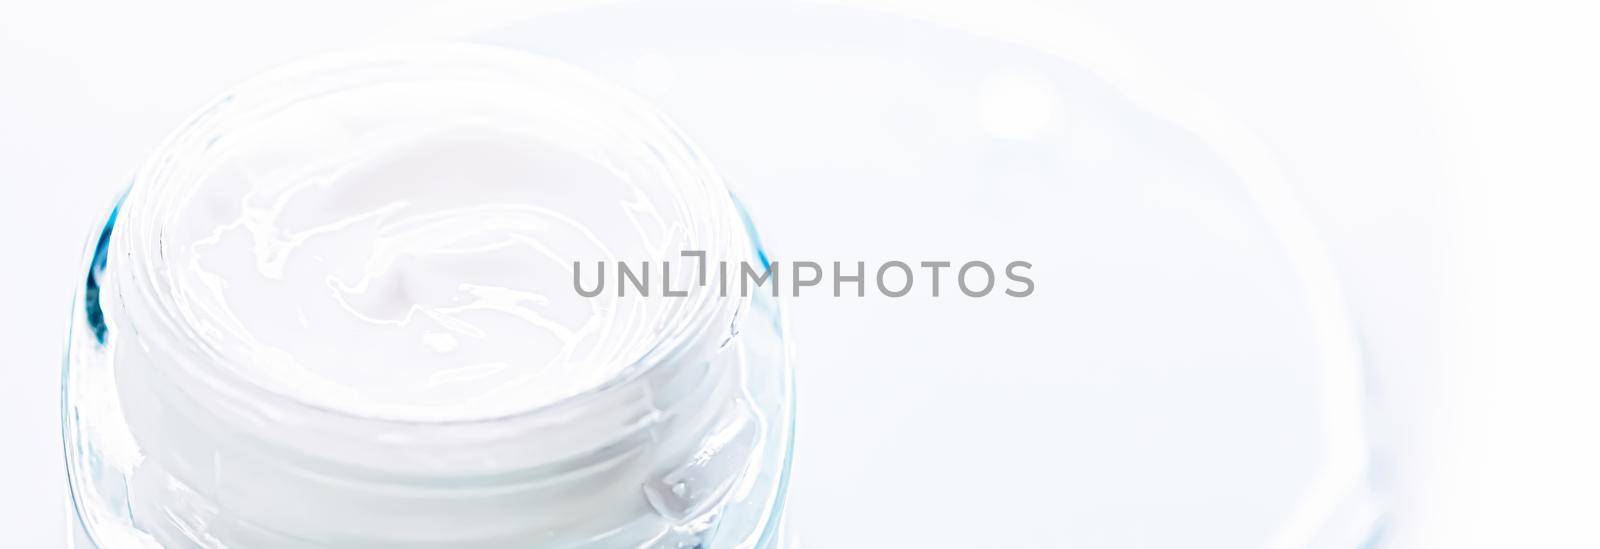 Skincare moisturiser cream in glass jar, luxury cosmetics and facial care product closeup